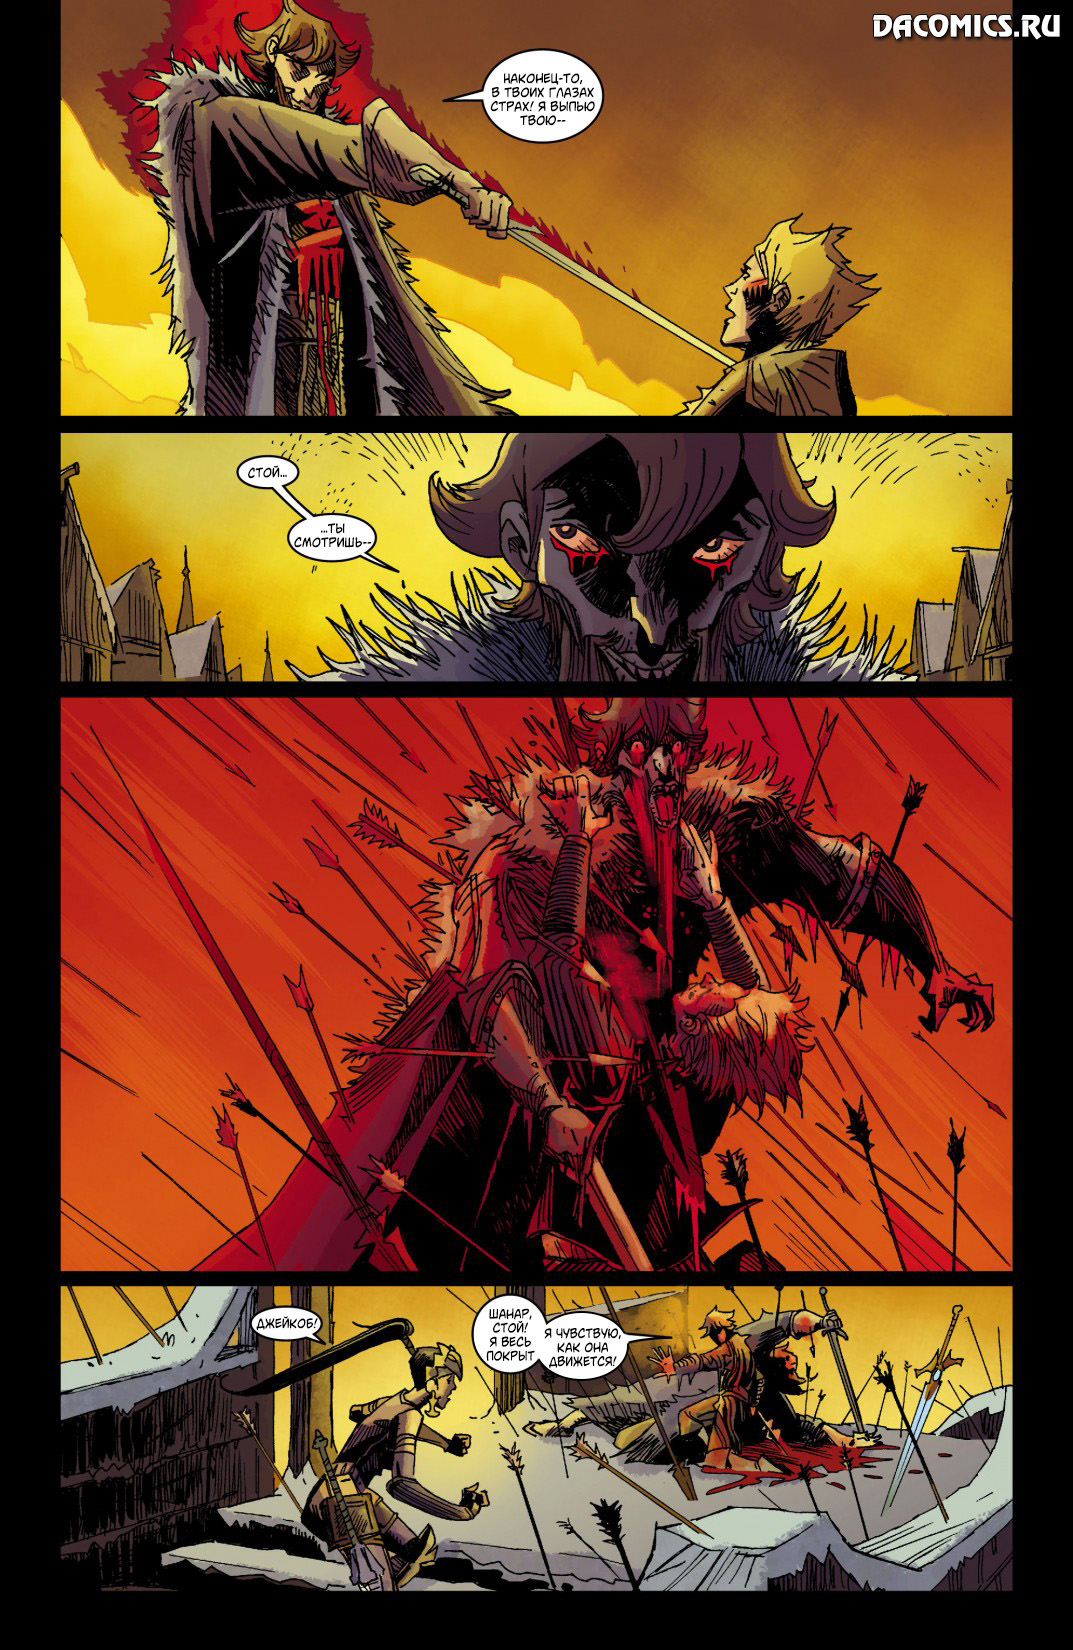 Sword of justice. Diablo 3 Comics. Питер Грубер меч правосудия. Возьми меч правосудия.